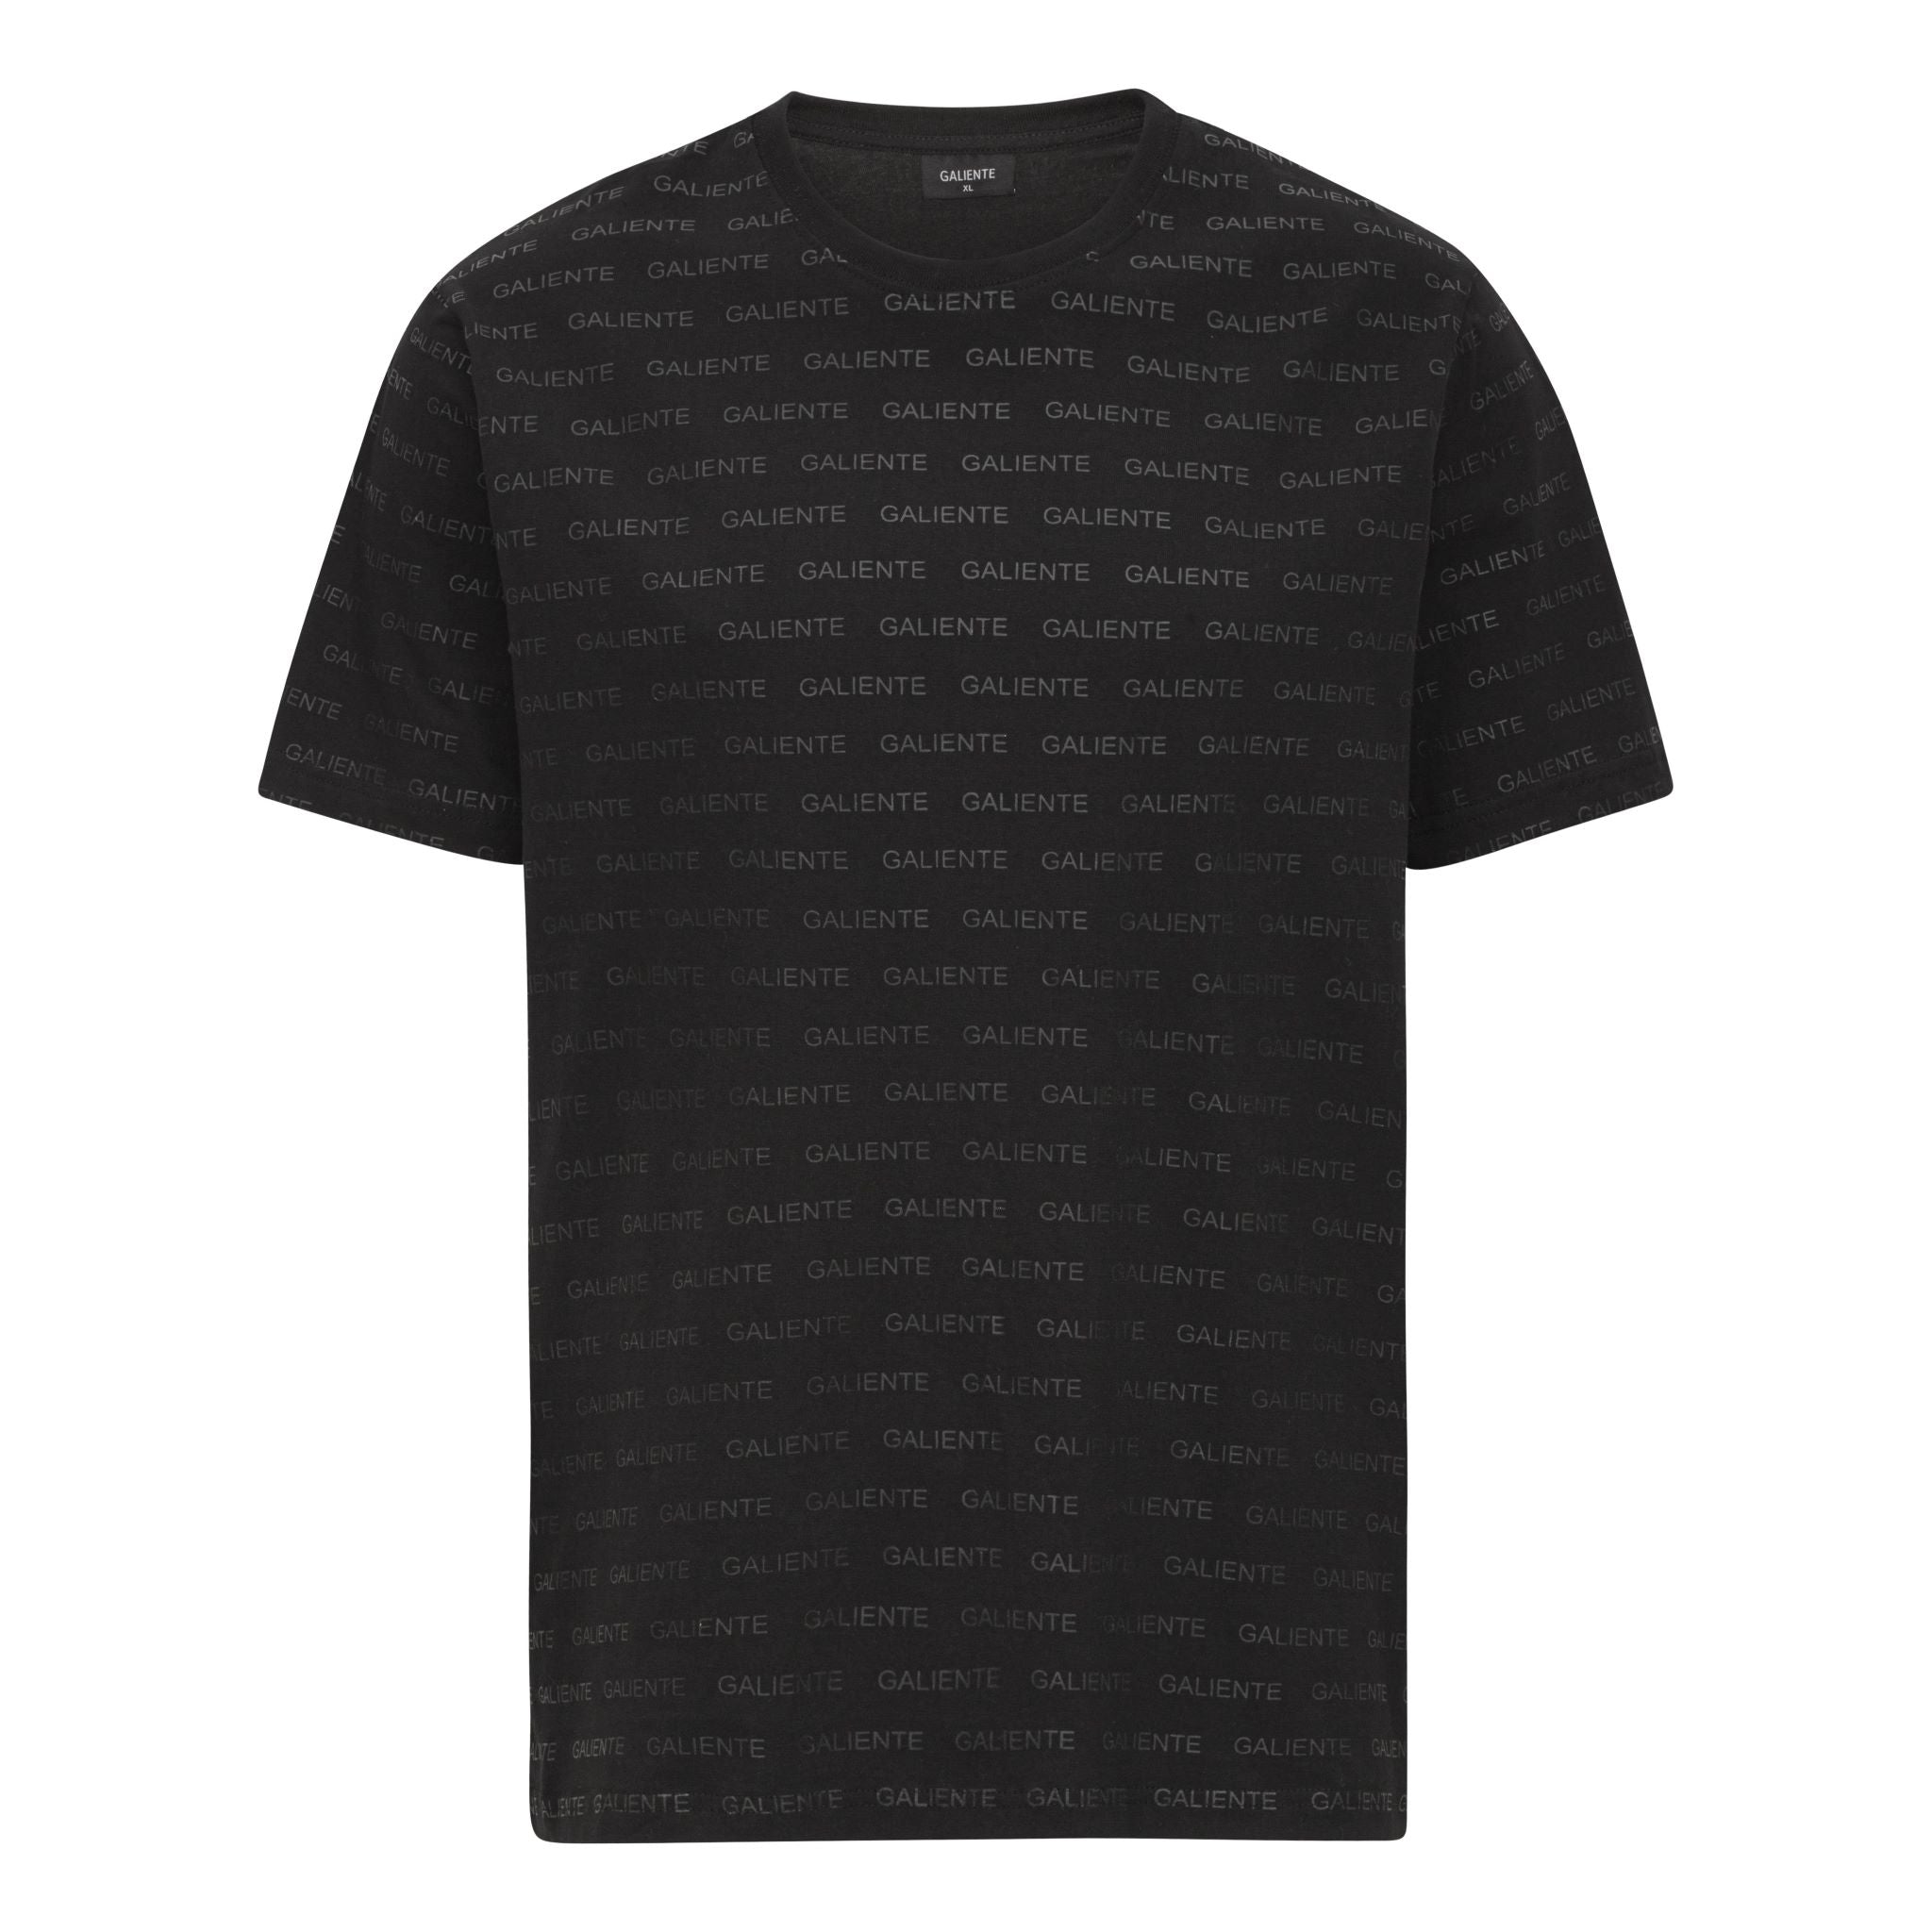 Oversize sort T-shirt med allover Galiente print